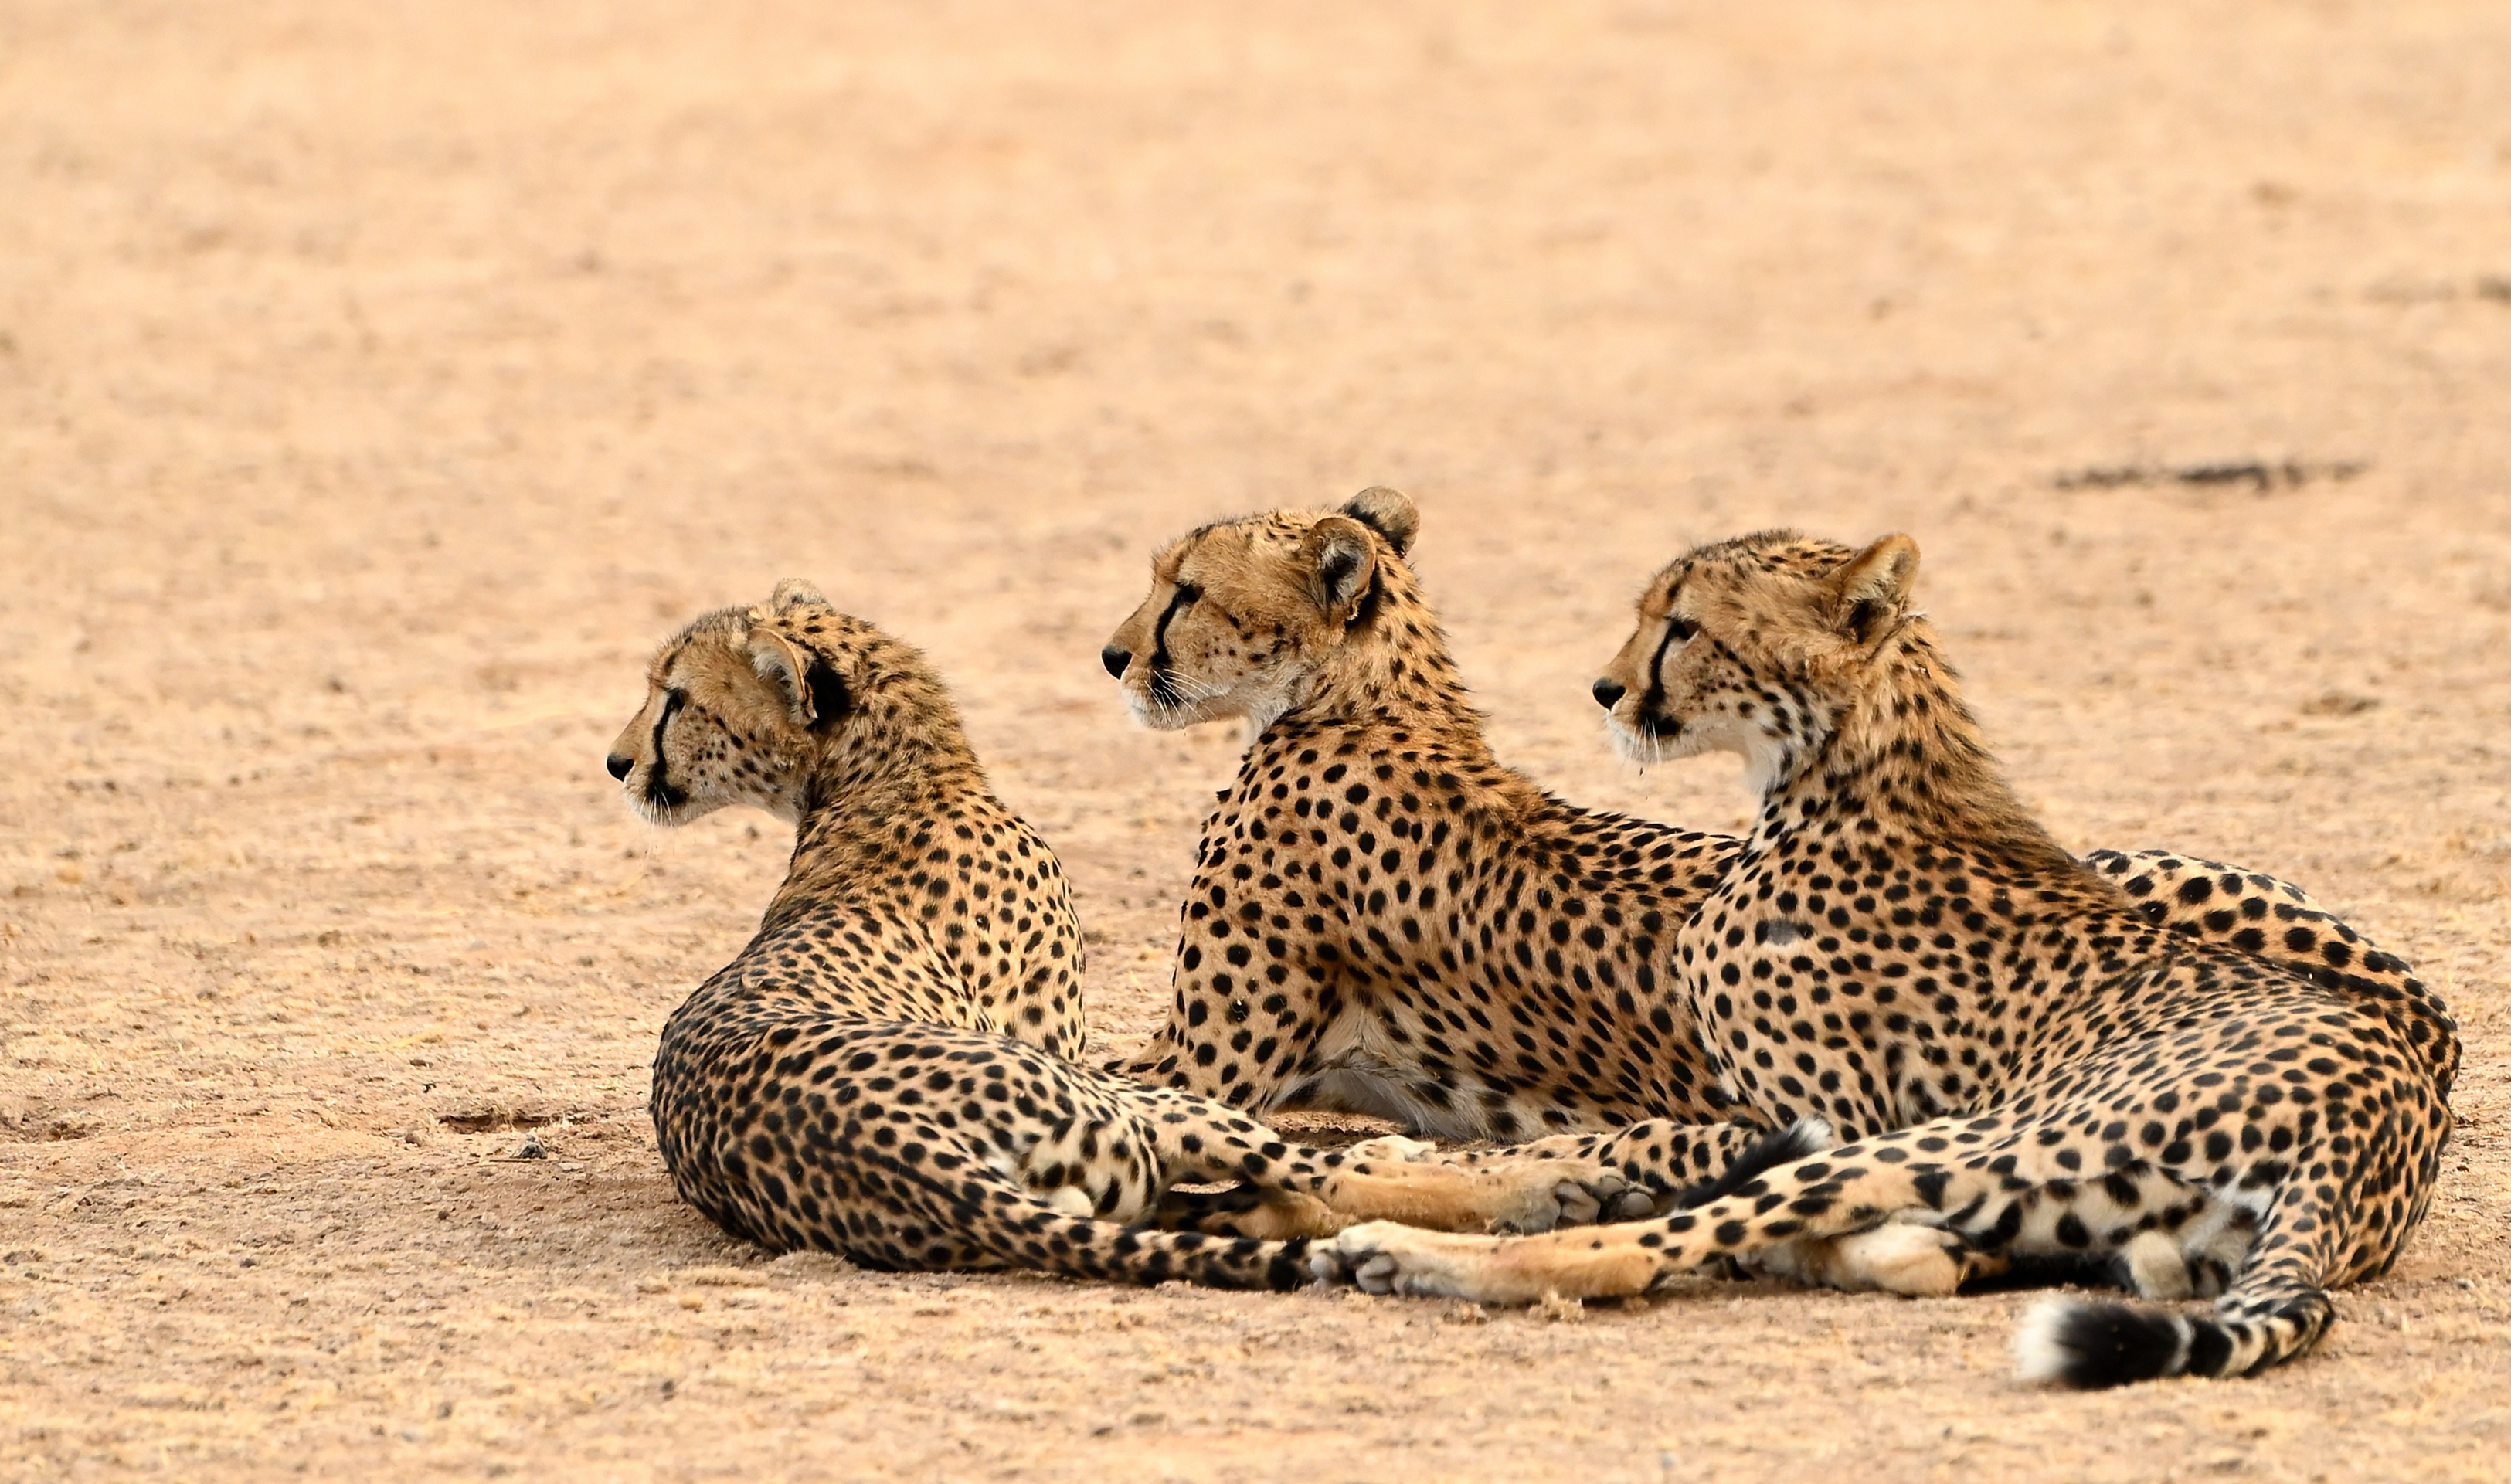 Big Cat Cheetah Wildlife Predator Animal 3250x1921